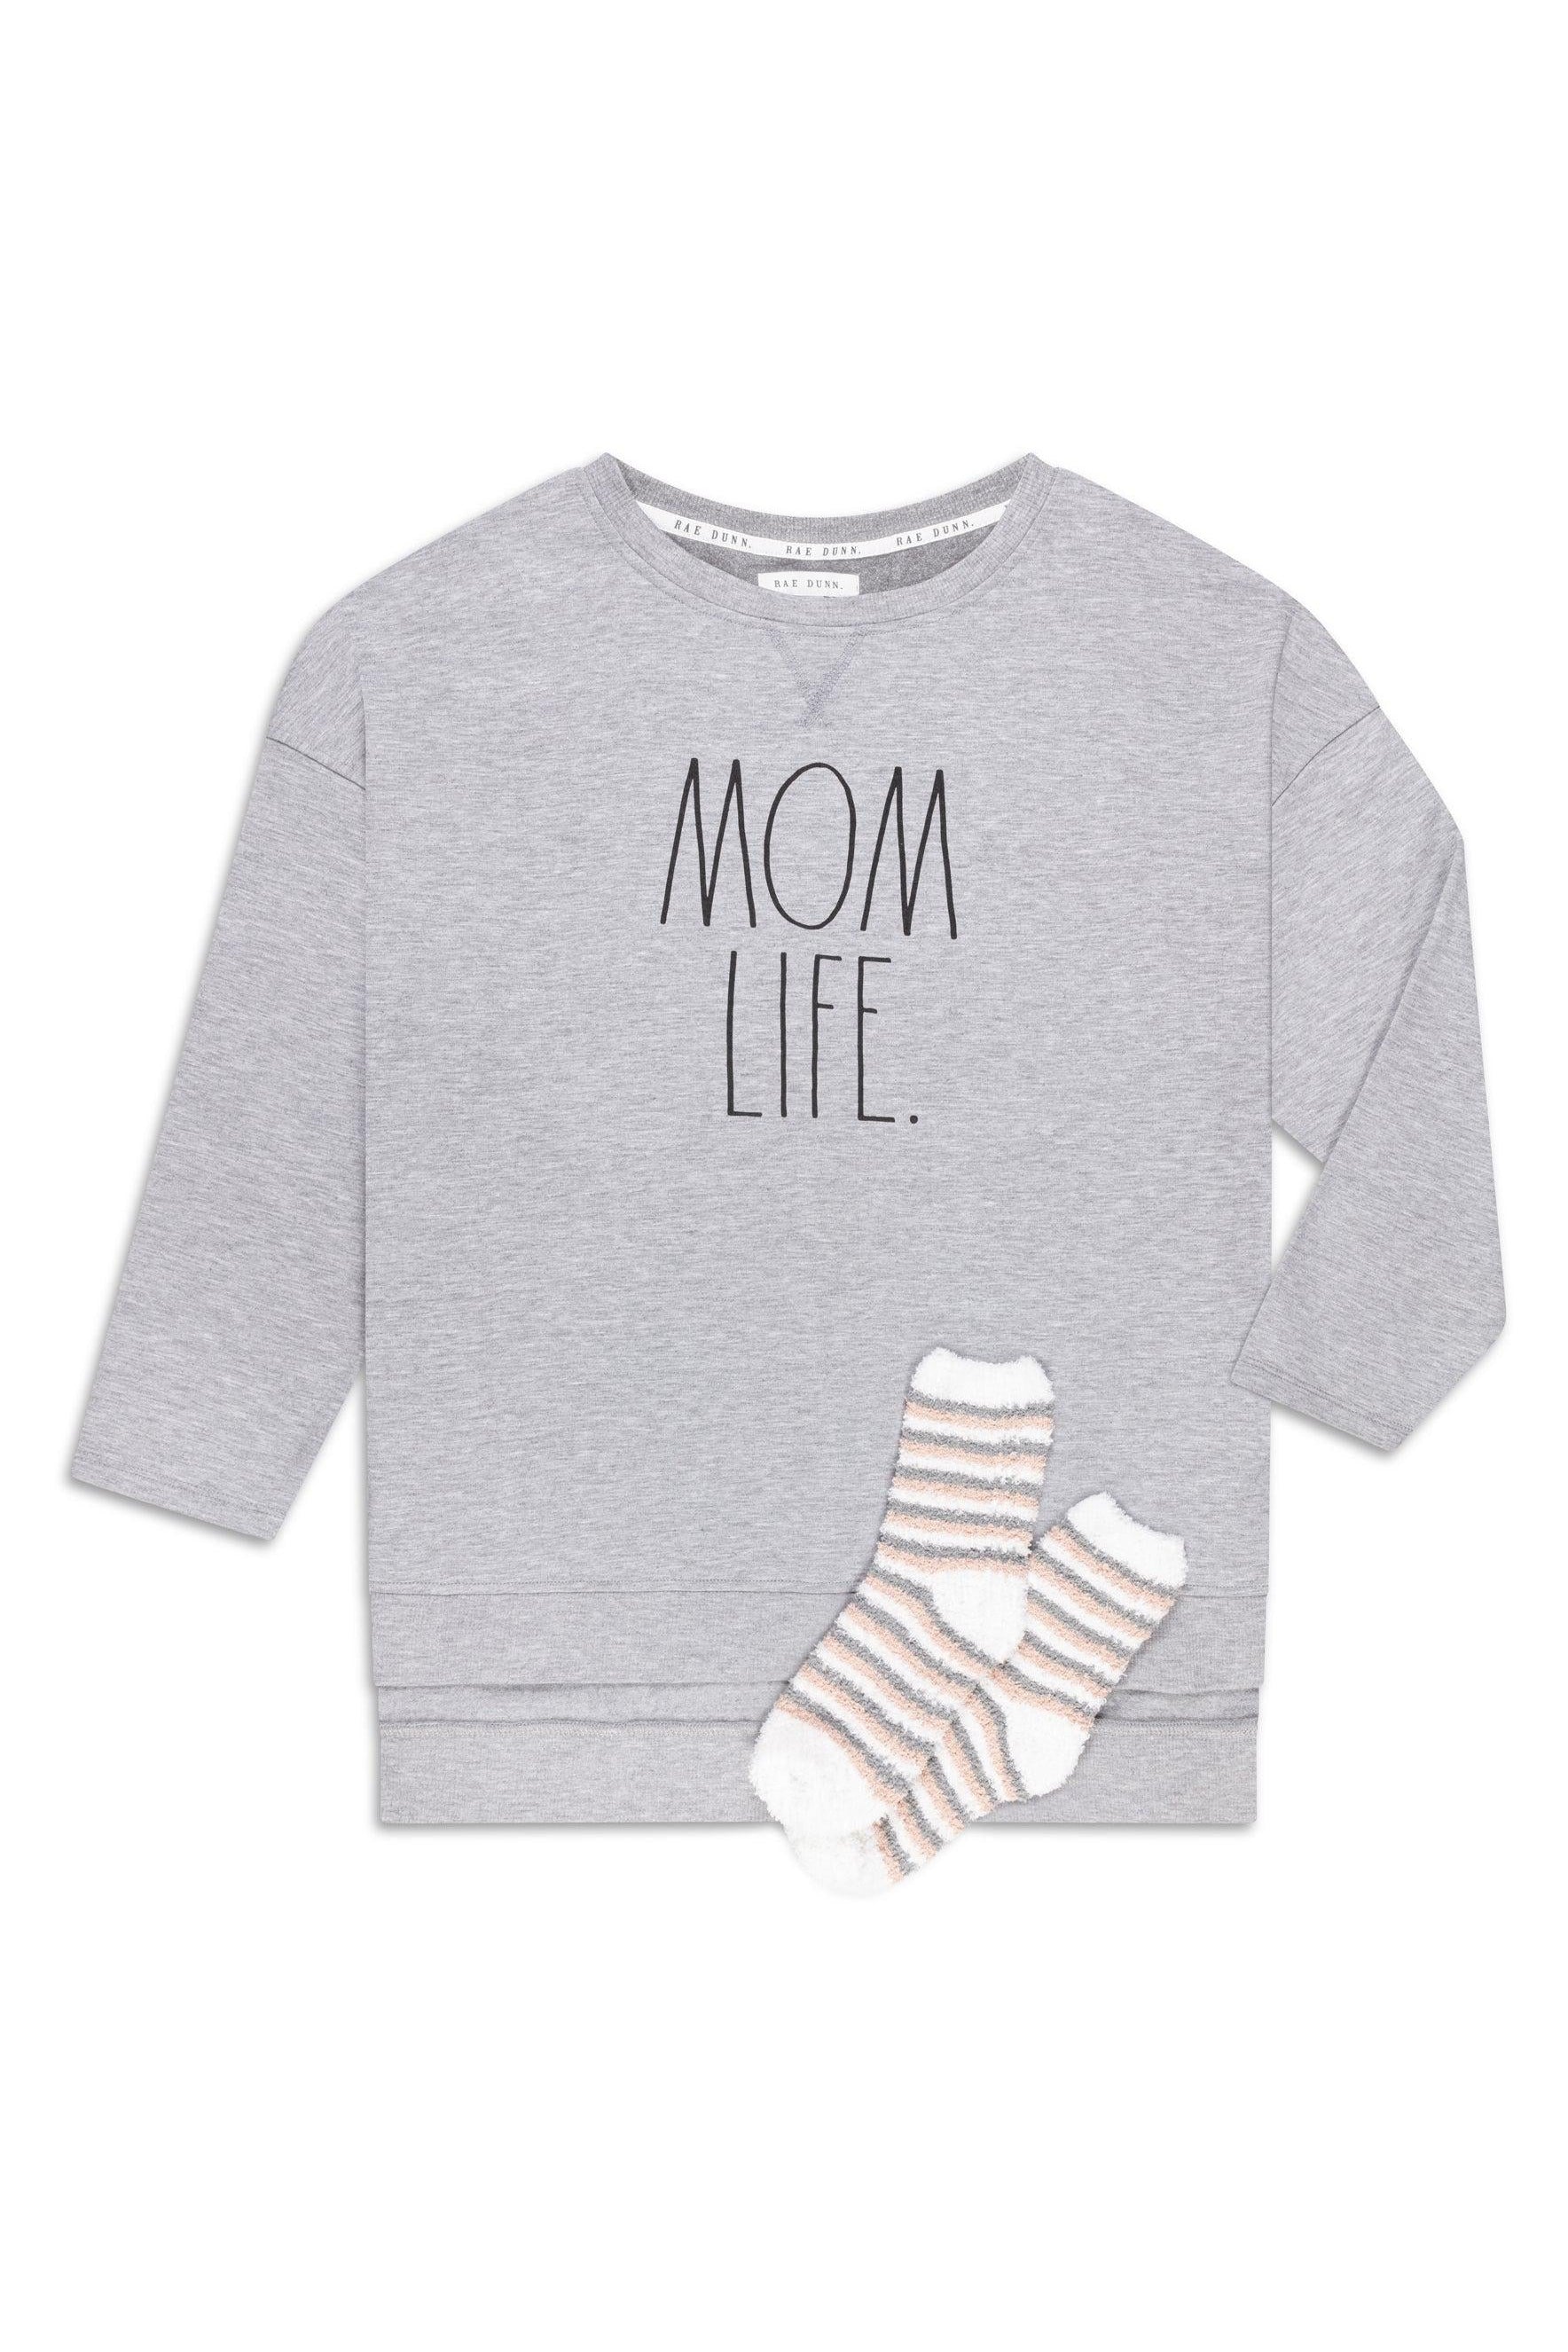 Women's Plus Size "MOM LIFE" Pullover Tunic Sweatshirt with Cozy Socks - Rae Dunn Wear